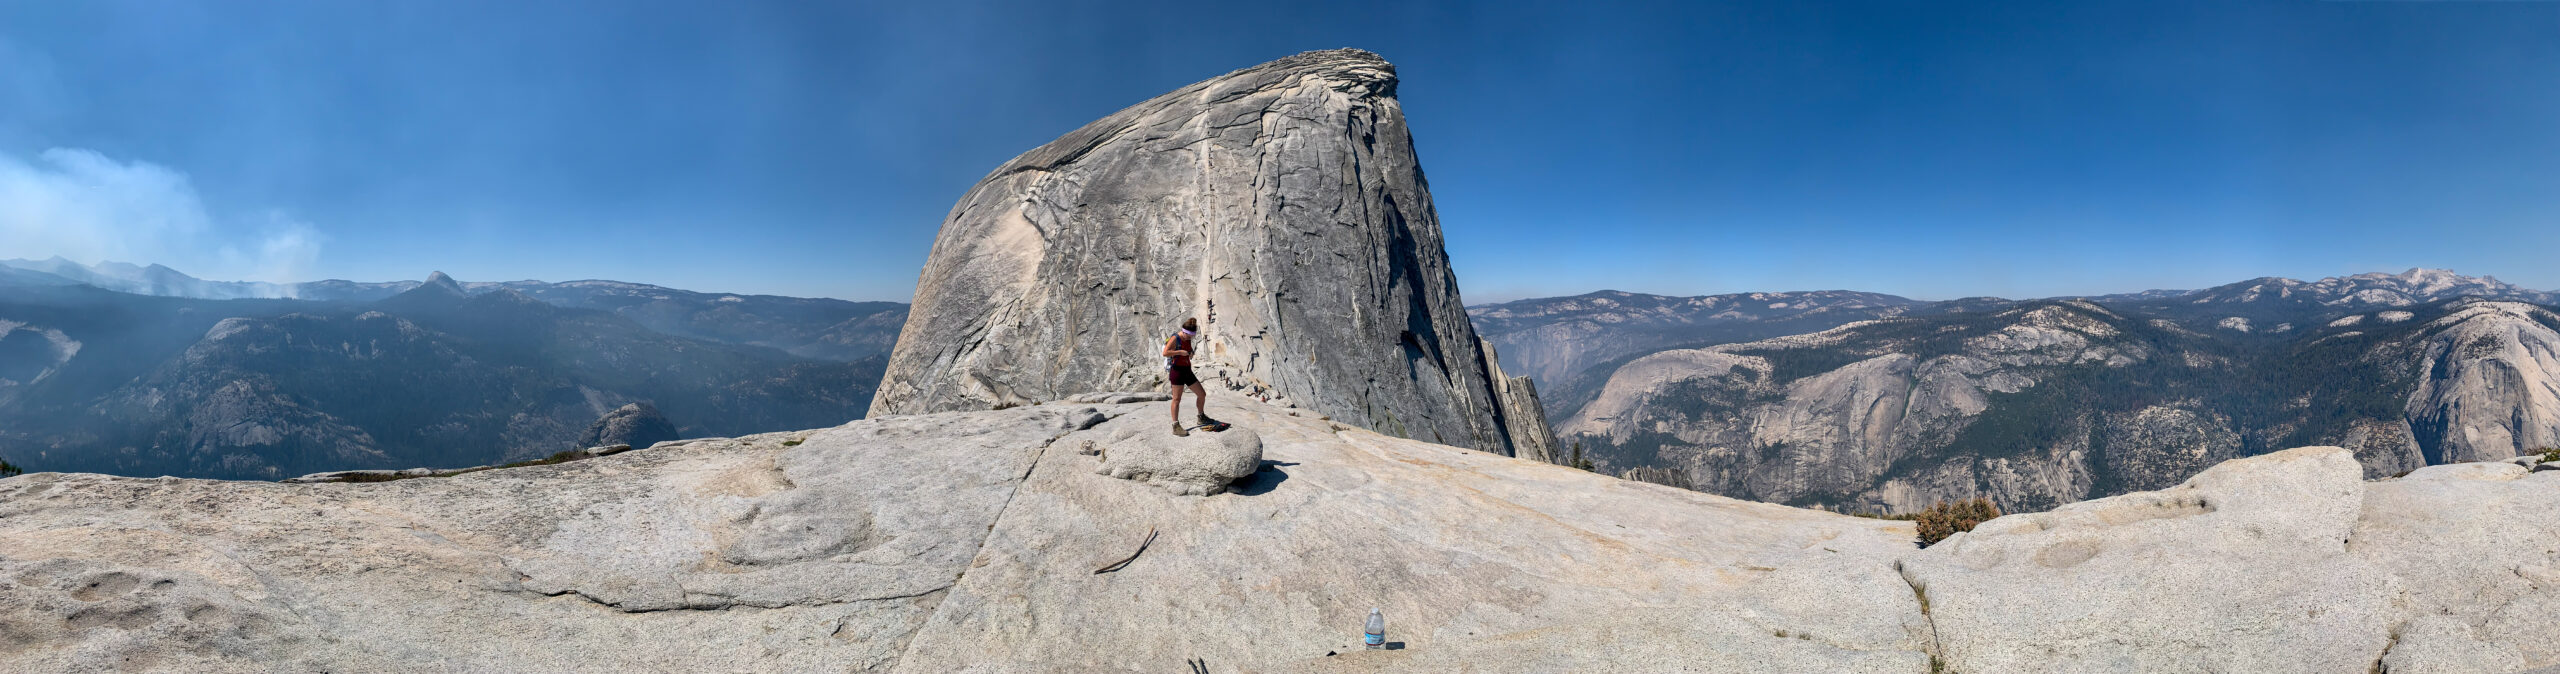 Getting ready to hike Half Dome in Yosemite